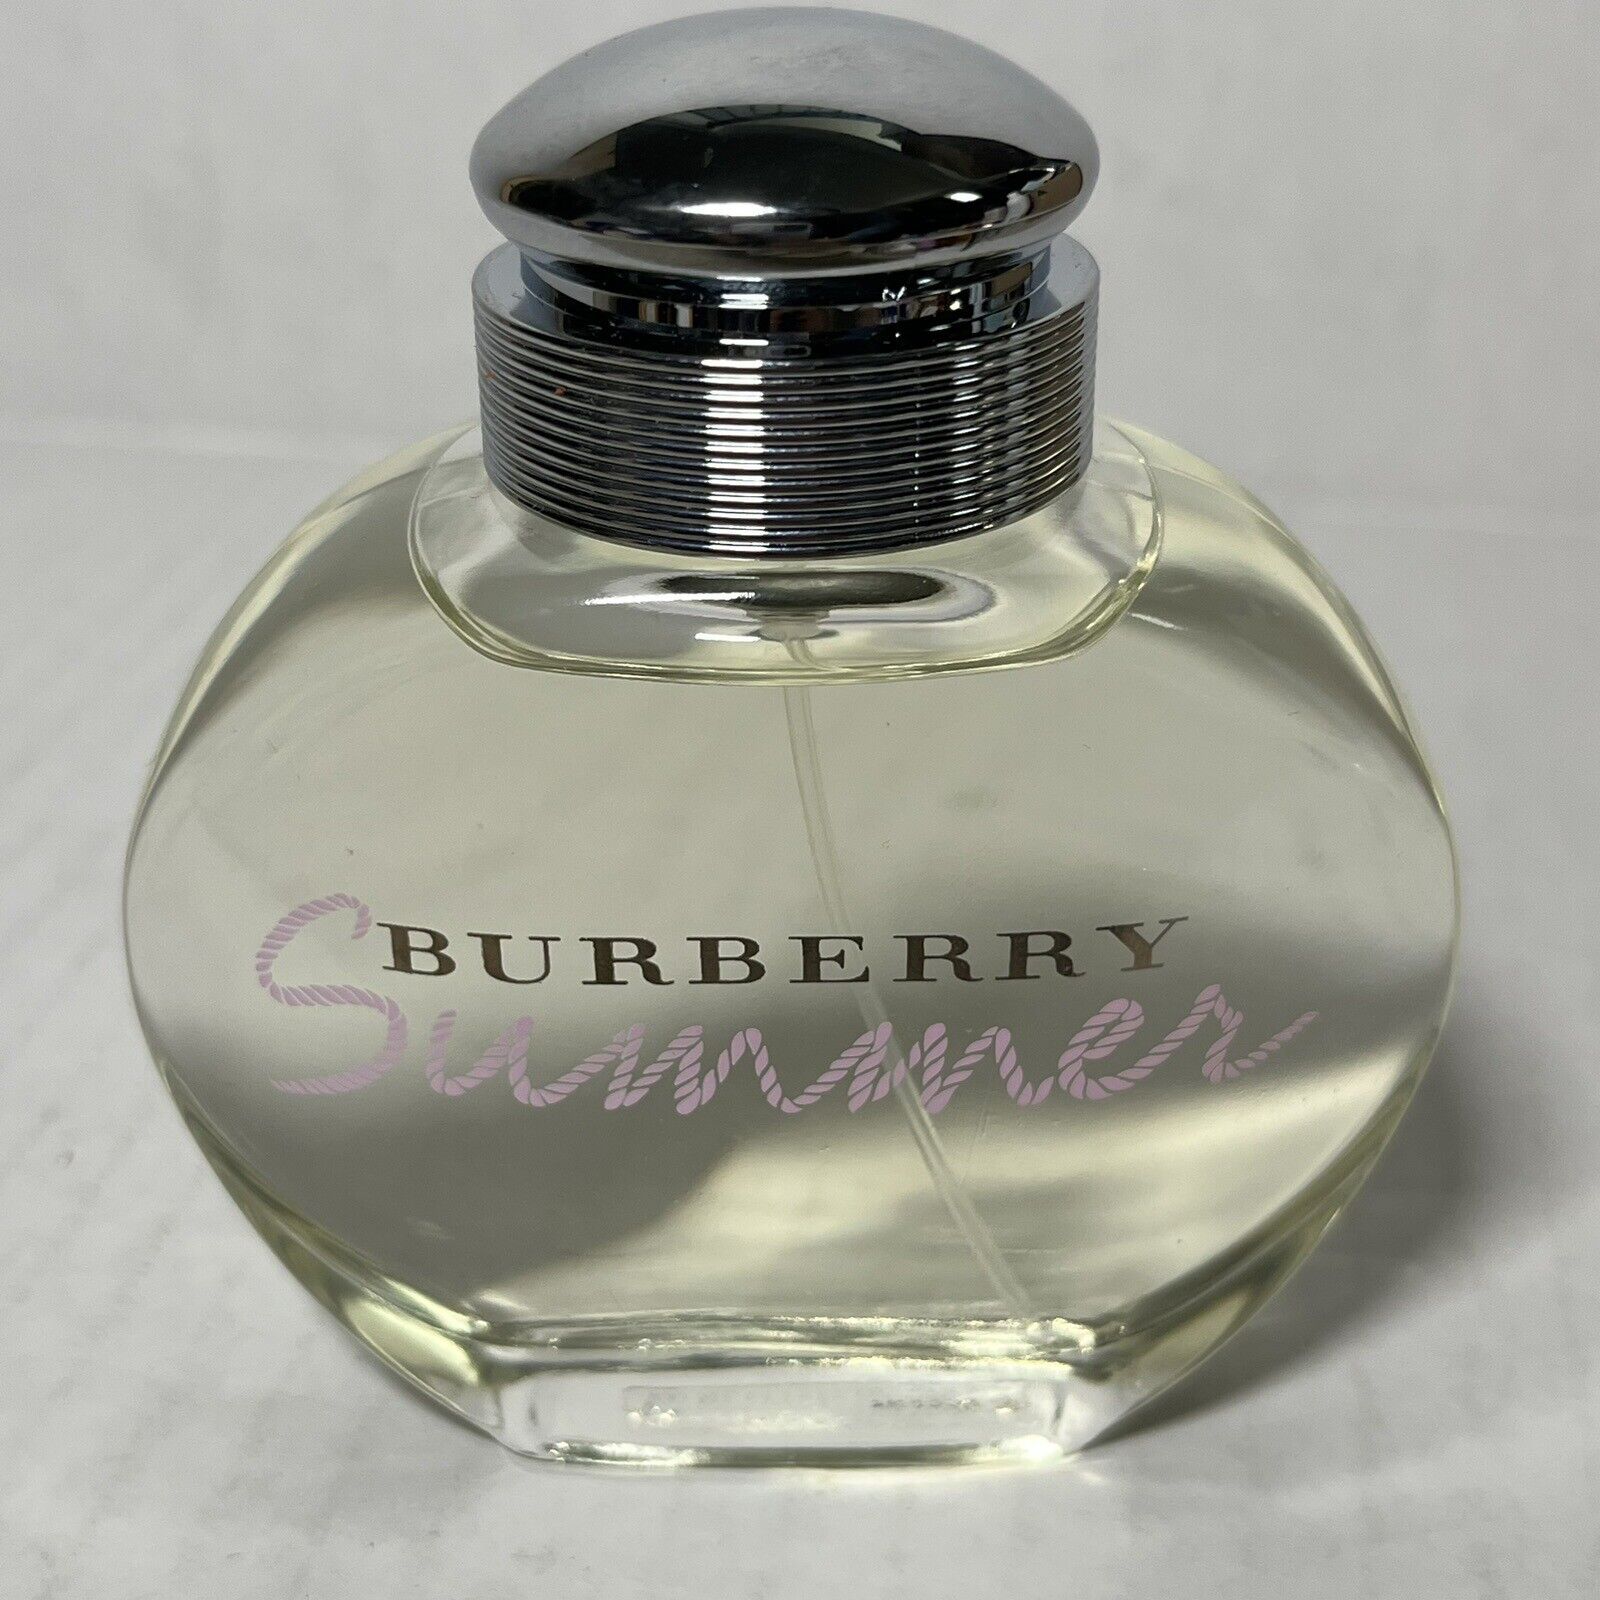 Burberry Summer Women by Burberry 3.3 oz Eau de Toilette Spray 2008 Edition